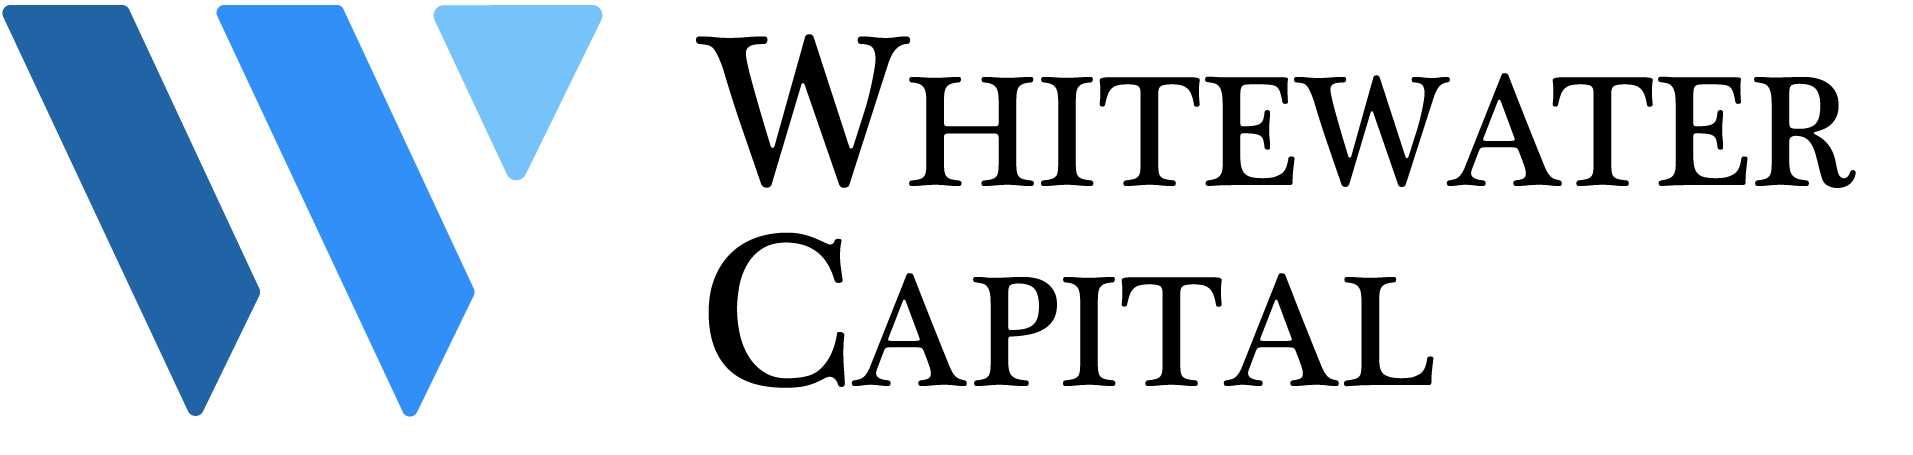 Whitewater Capital Logo